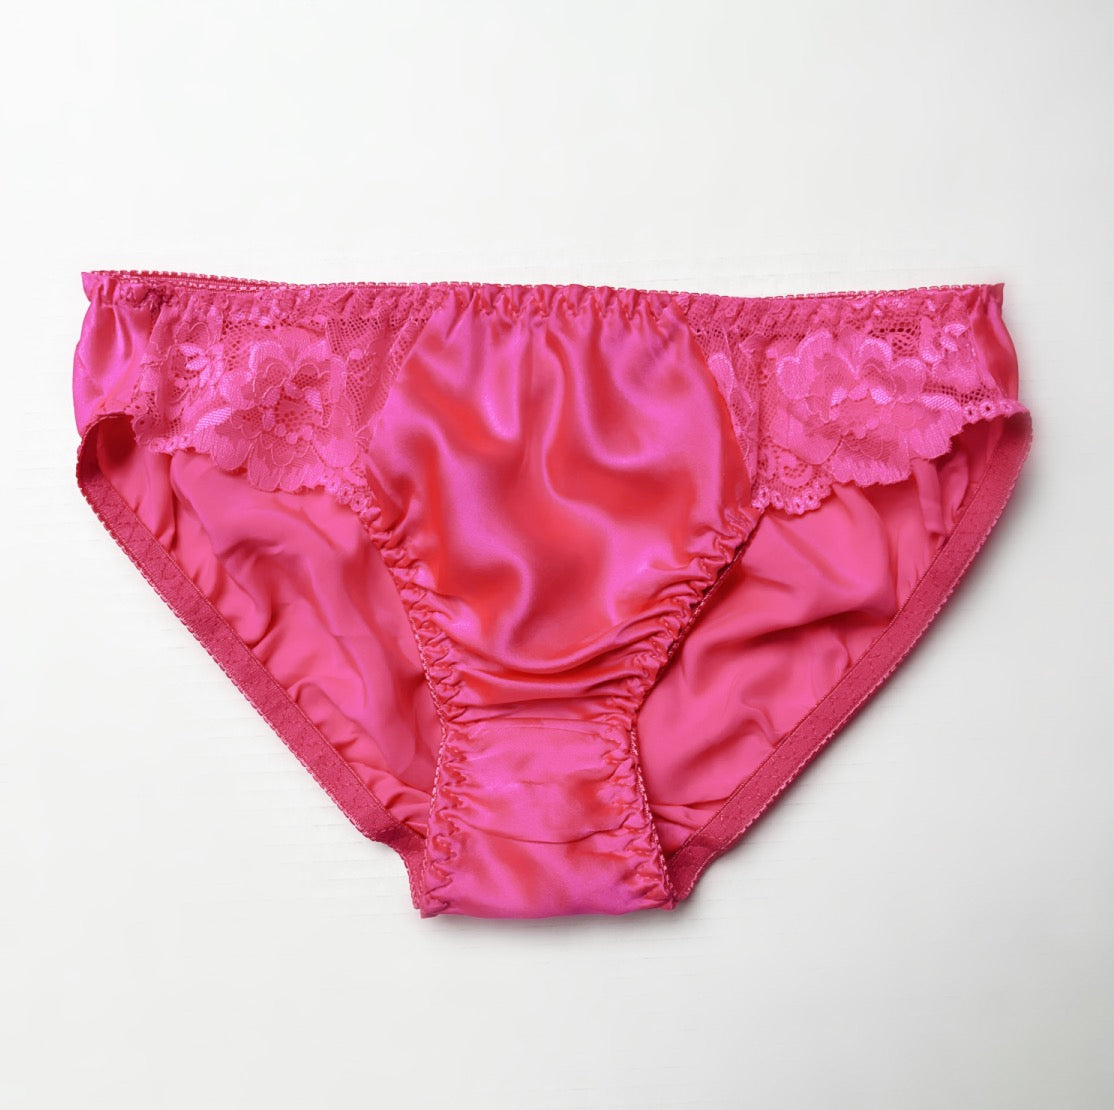 ZooChest Tanga Knickers for Women Sexy Silk Underwear for Women